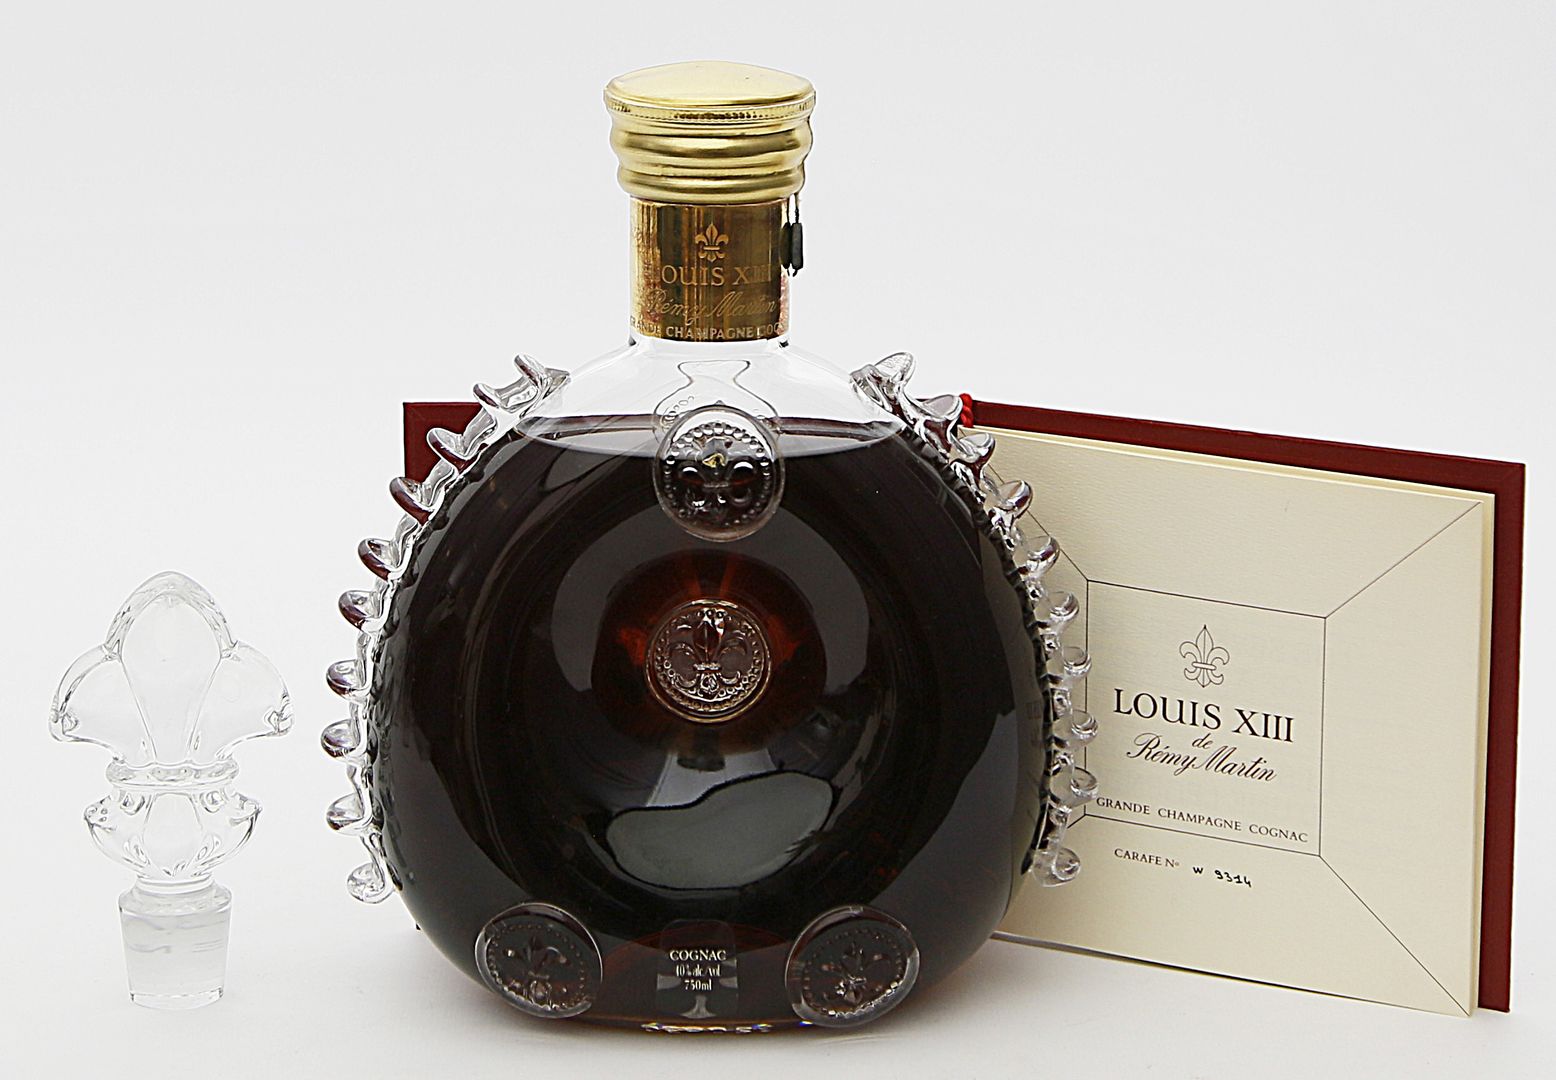 Grande Champagne Cognac "Louis XIII", Rémy Martin.